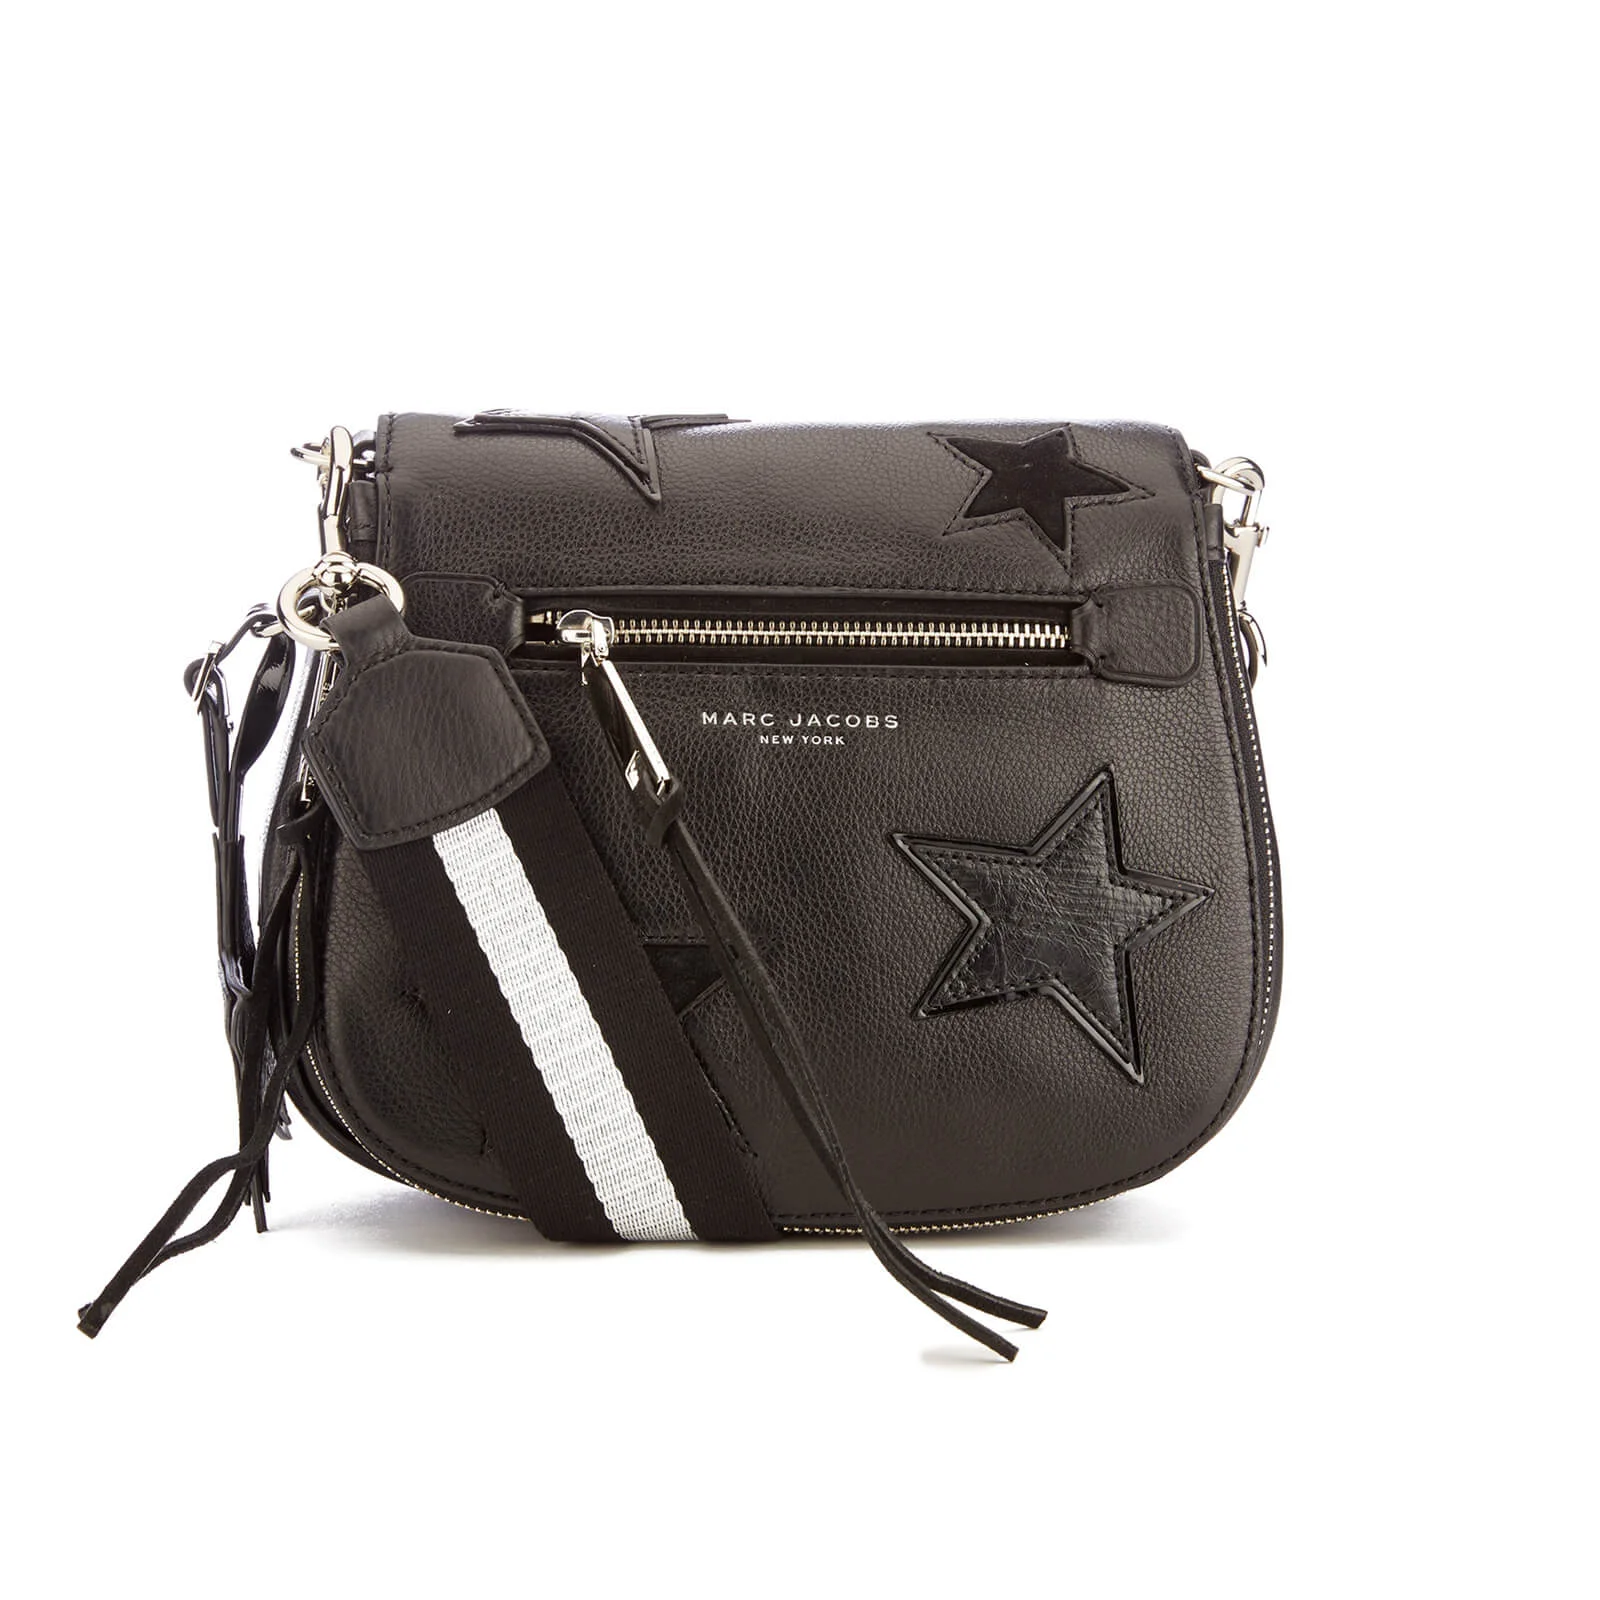 Marc Jacobs Women's Star Patchwork Small Saddle Bag - Black/Multi Image 1